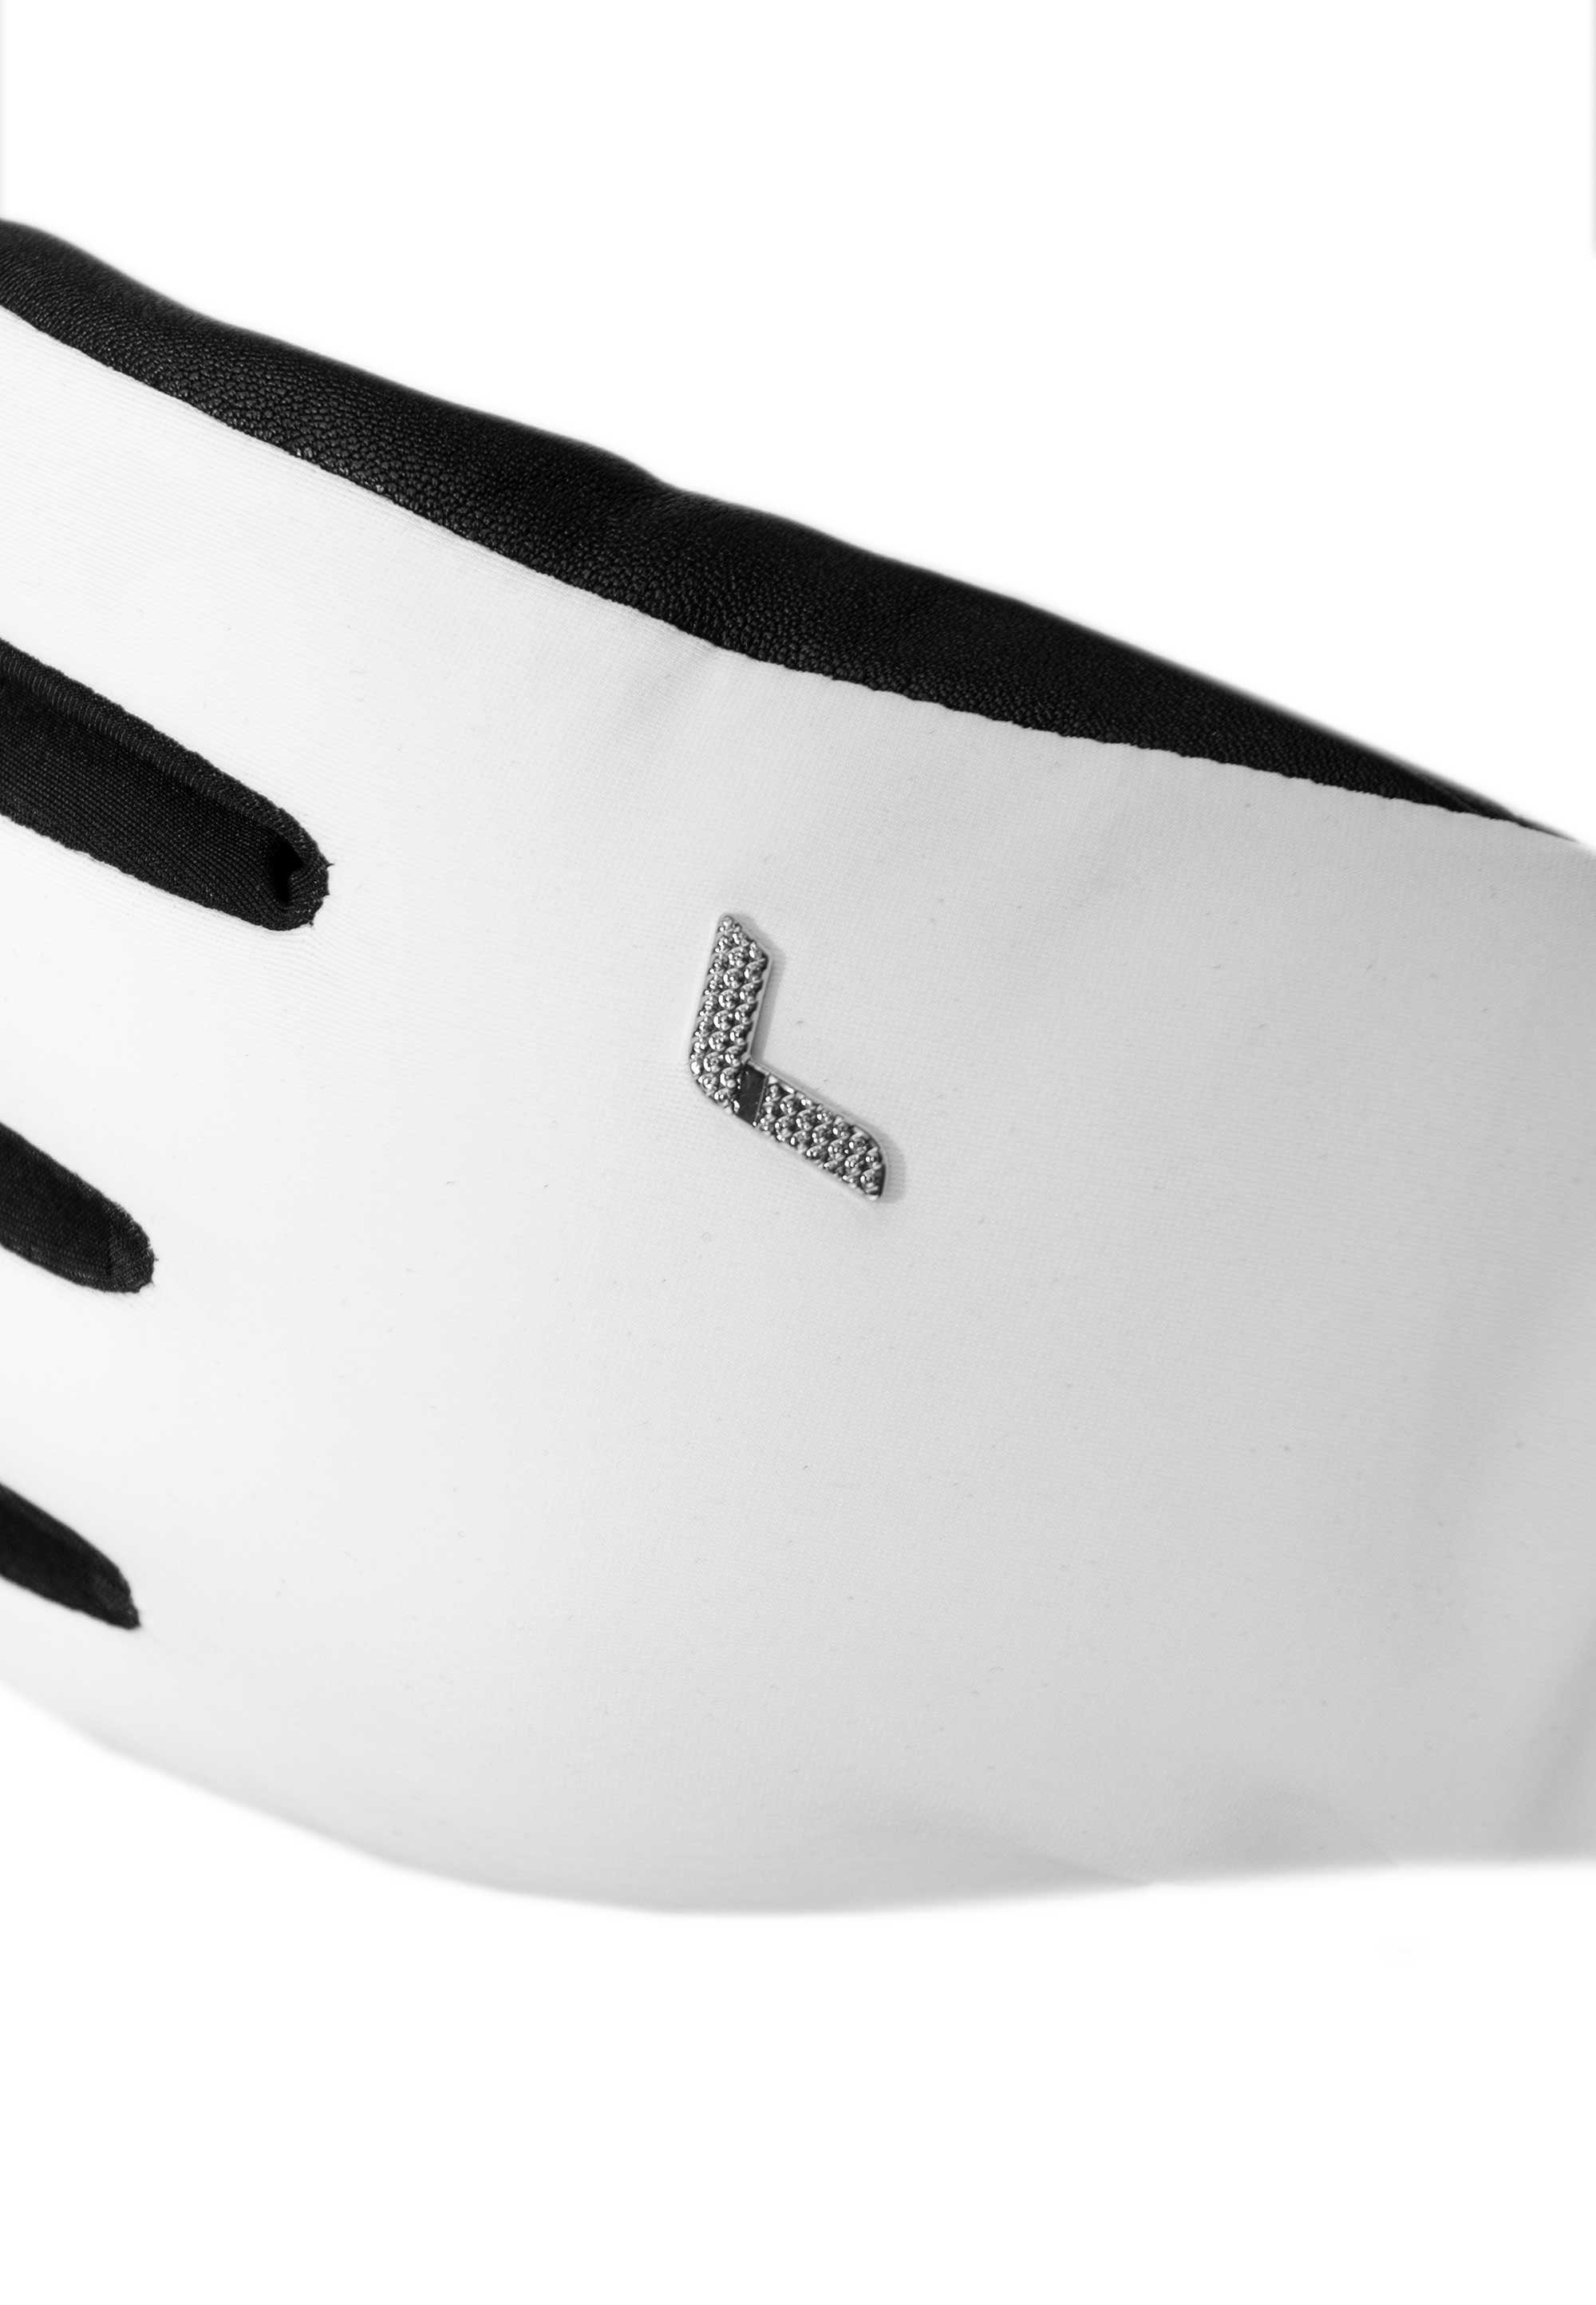 Skihandschuhe Insert-Membran Reusch TIFFANY mit innovativer XT R-TEX® weiß-schwarz